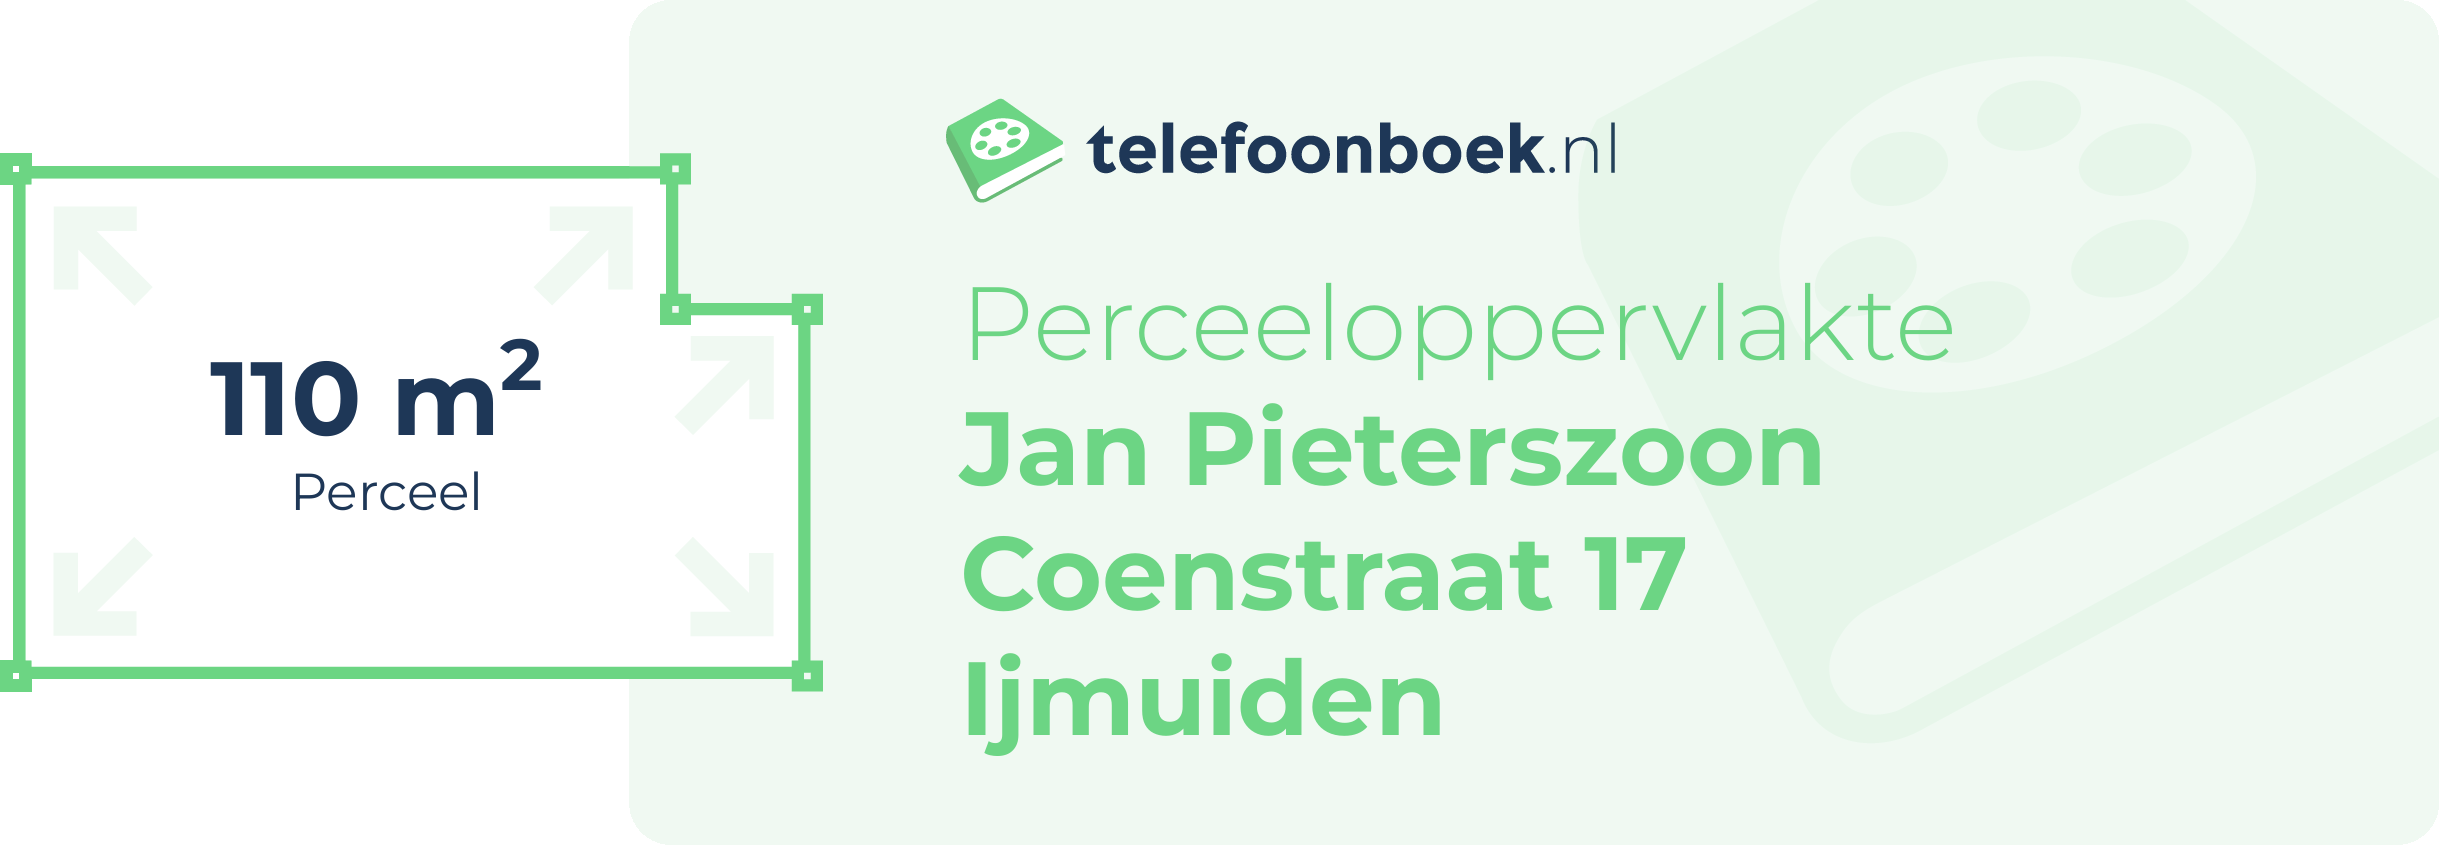 Perceeloppervlakte Jan Pieterszoon Coenstraat 17 Ijmuiden